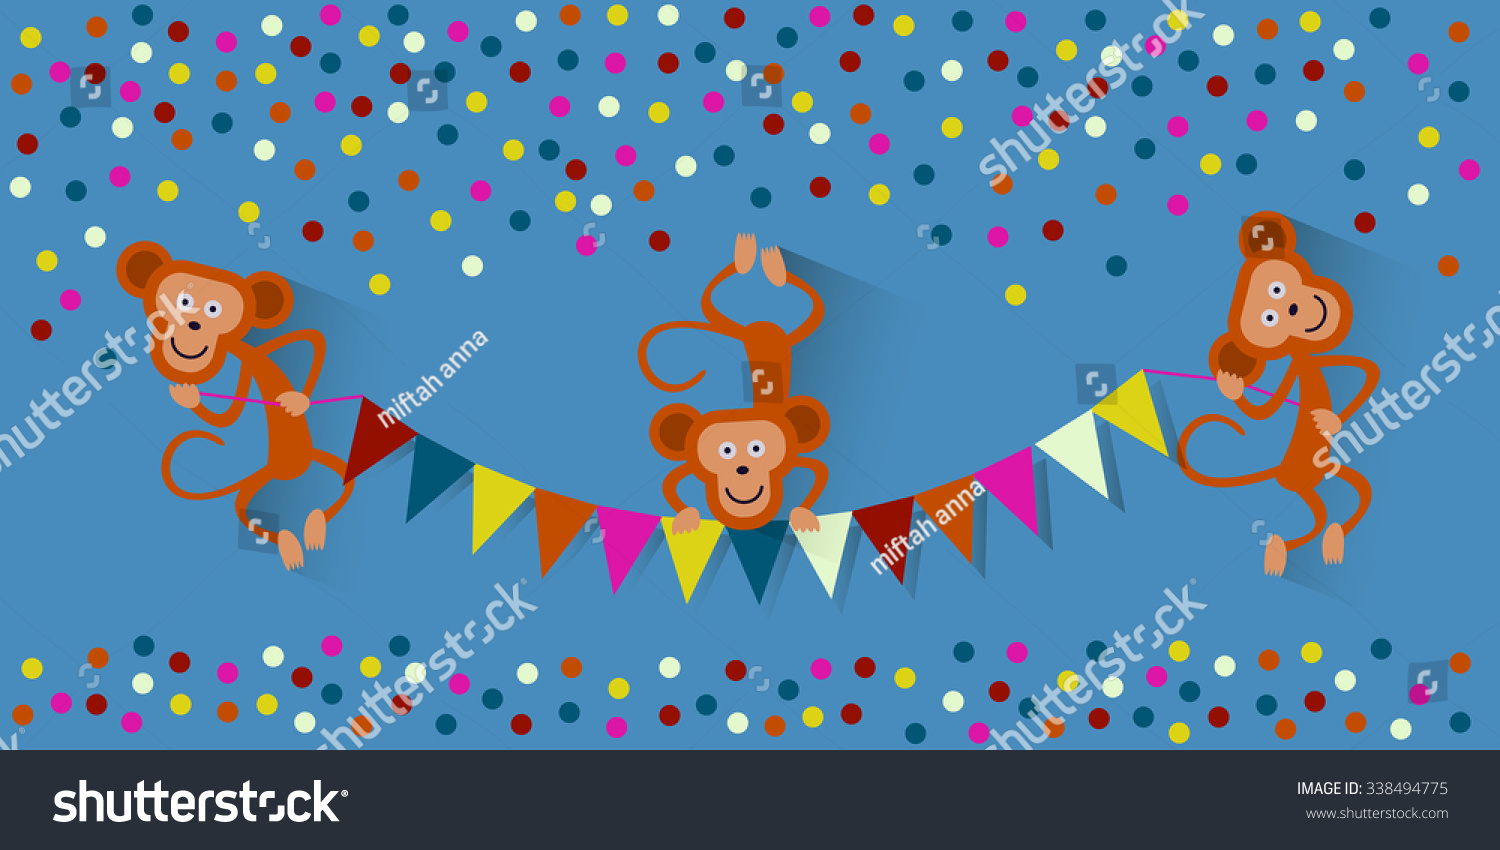 Dancing Monkeys Confetti Flags Stock Vector Royalty Free 338494775